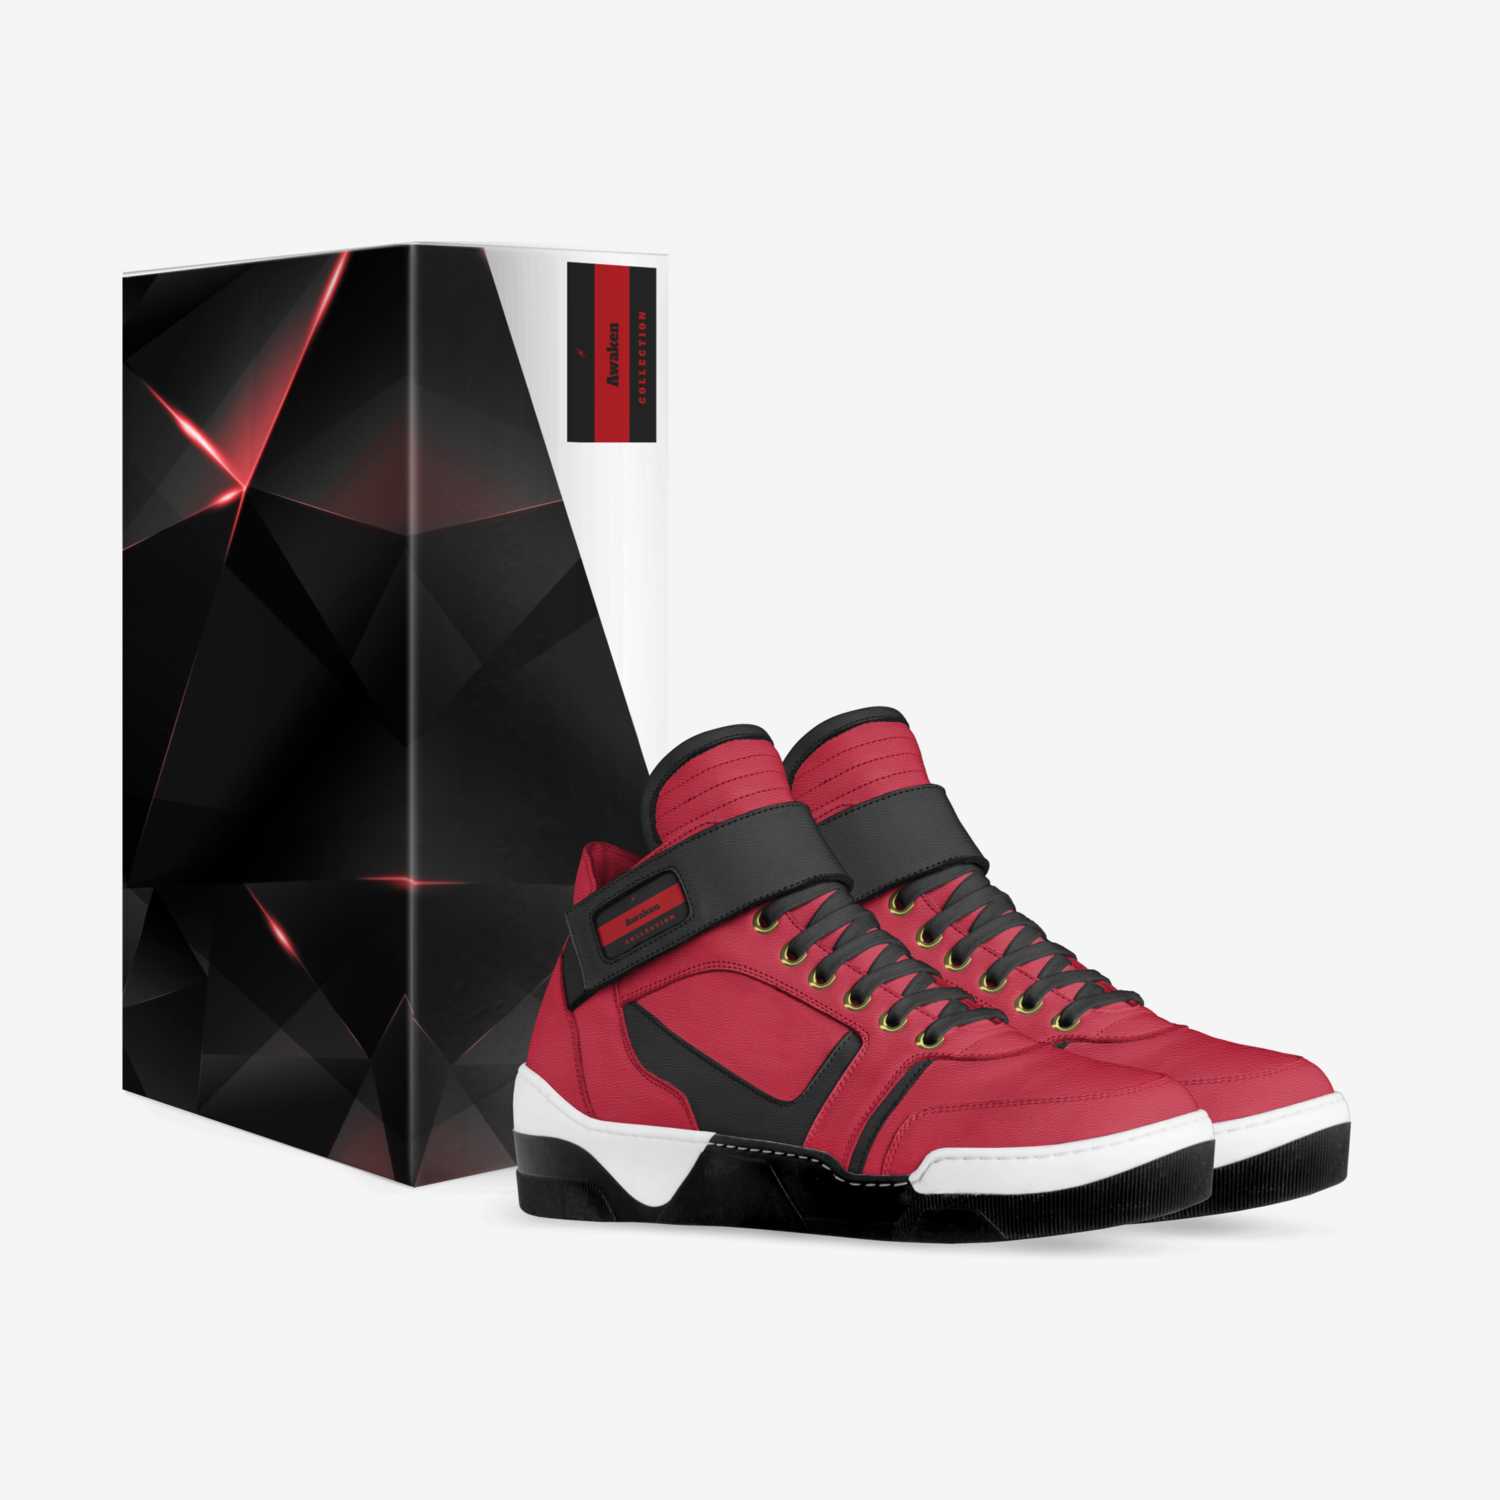 Awaken custom made in Italy shoes by Isaiah Benton Cates | Box view